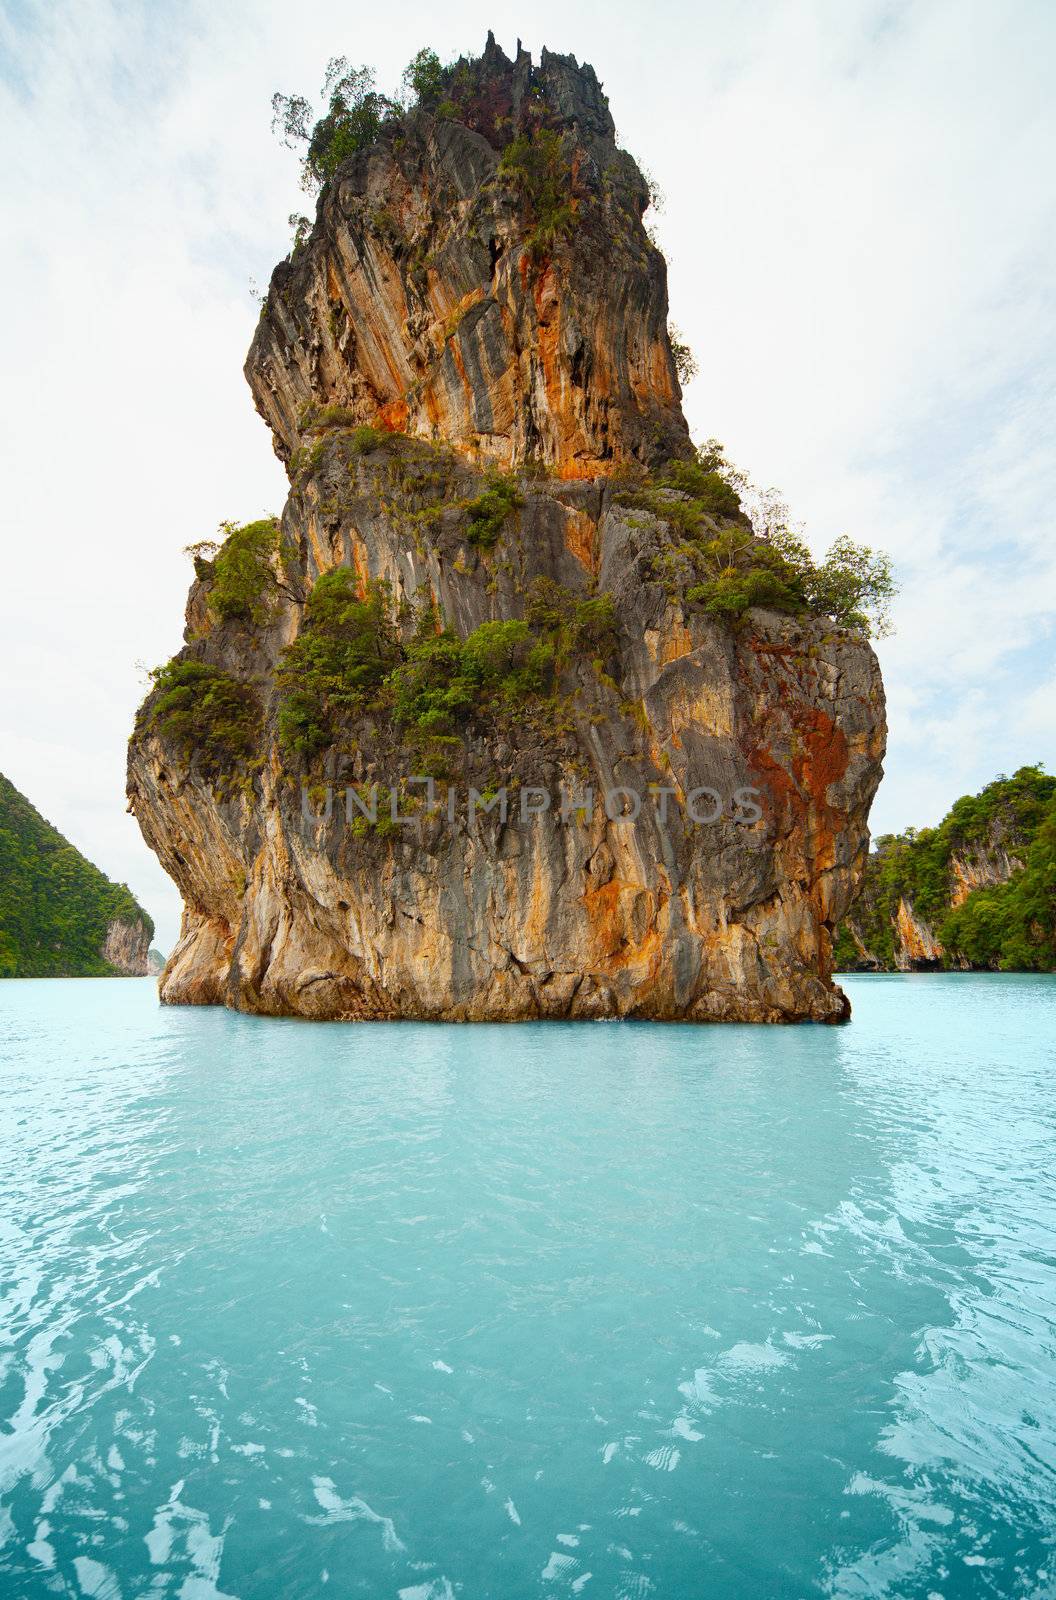 The high limestone island in the ocean - the coast of Thailand, Phuket